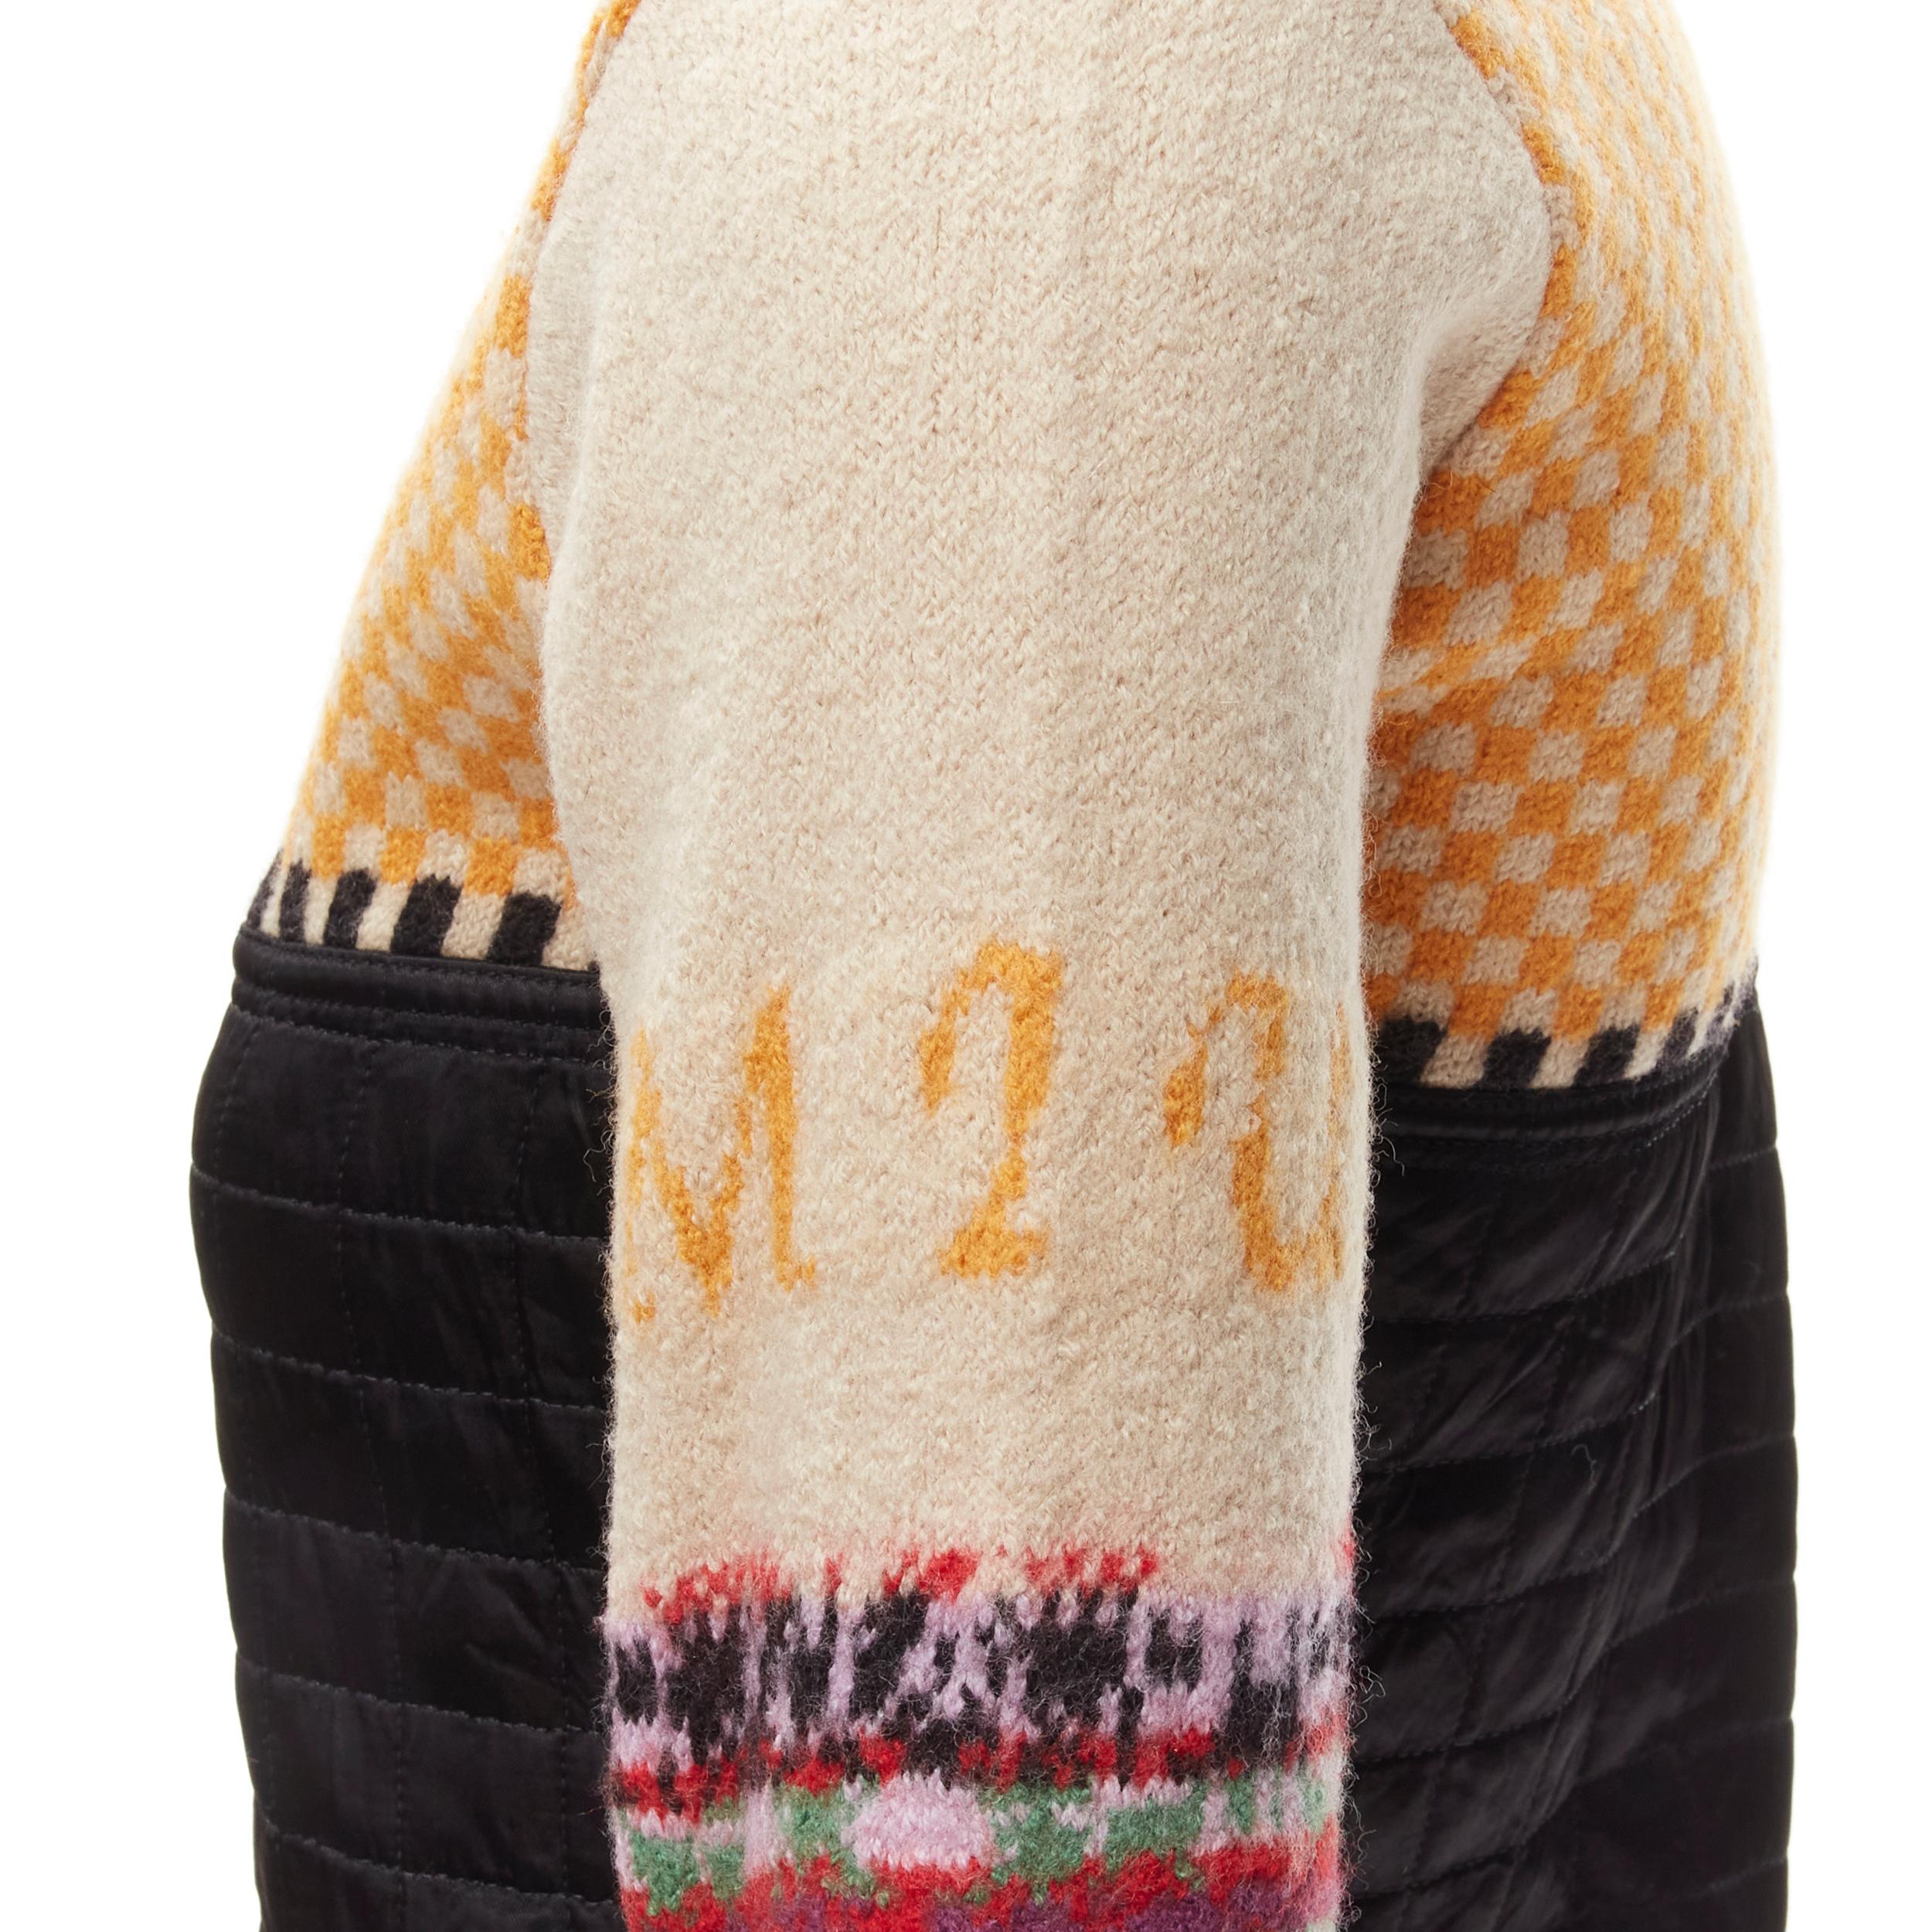 MIU MIU 2001 Vintage Runway wool logo abstract print quilted jacket IT40 S
Reference: TGAS/C01991
Brand: Miu Miu
Designer: Miuccia Prada
Collection: Fall 2001 Look 18 - Runway
Material: Wool, Fabric
Color: Multicolour, Black
Pattern: